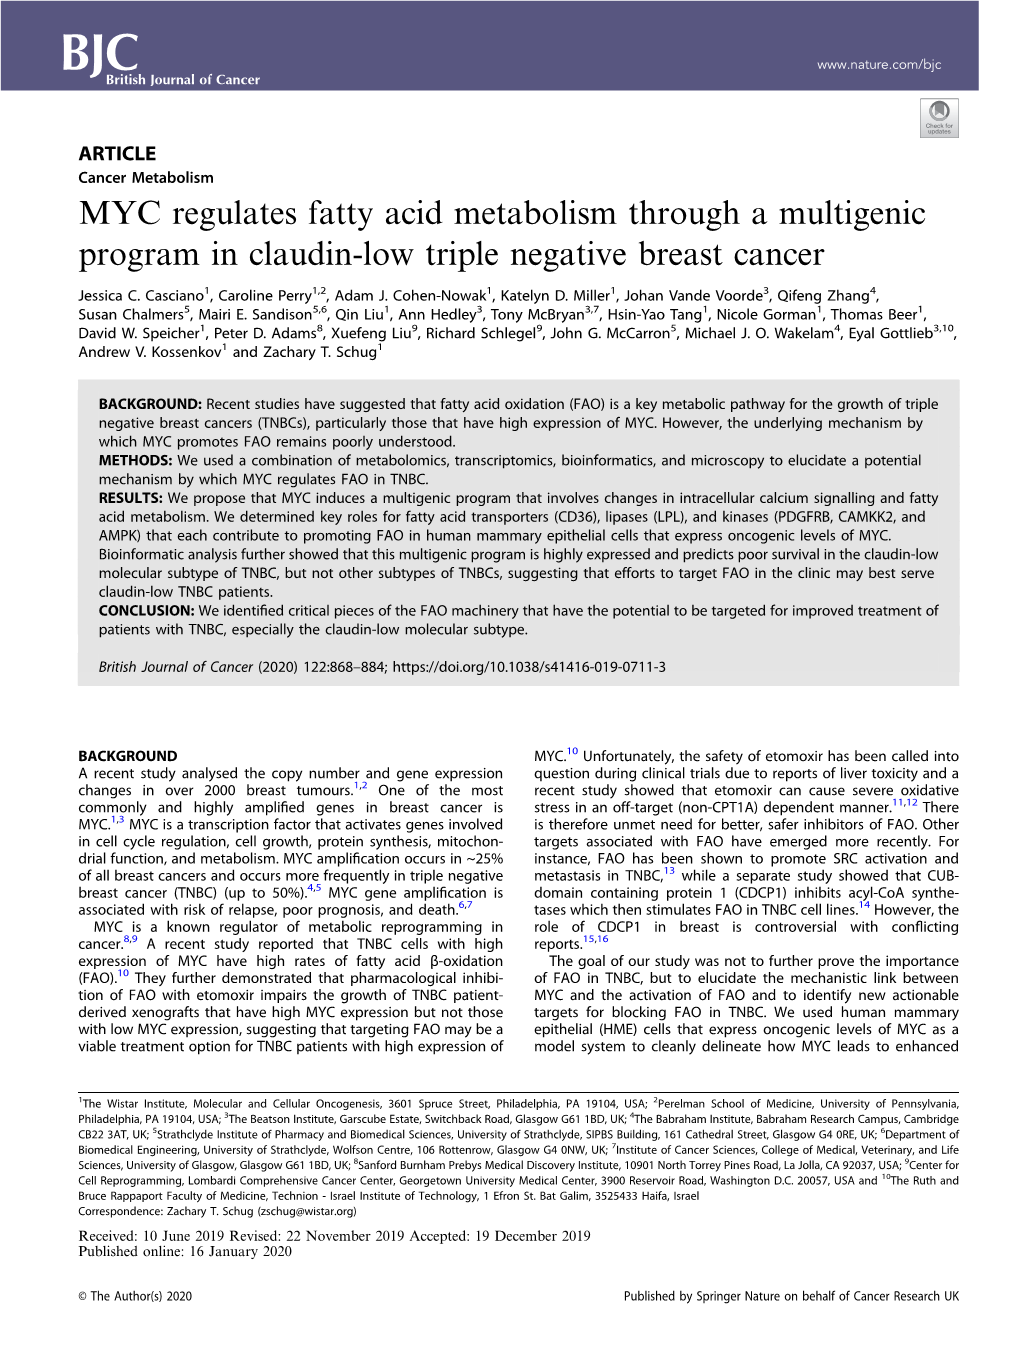 MYC Regulates Fatty Acid Metabolism Through a Multigenic Program in Claudin-Low Triple Negative Breast Cancer